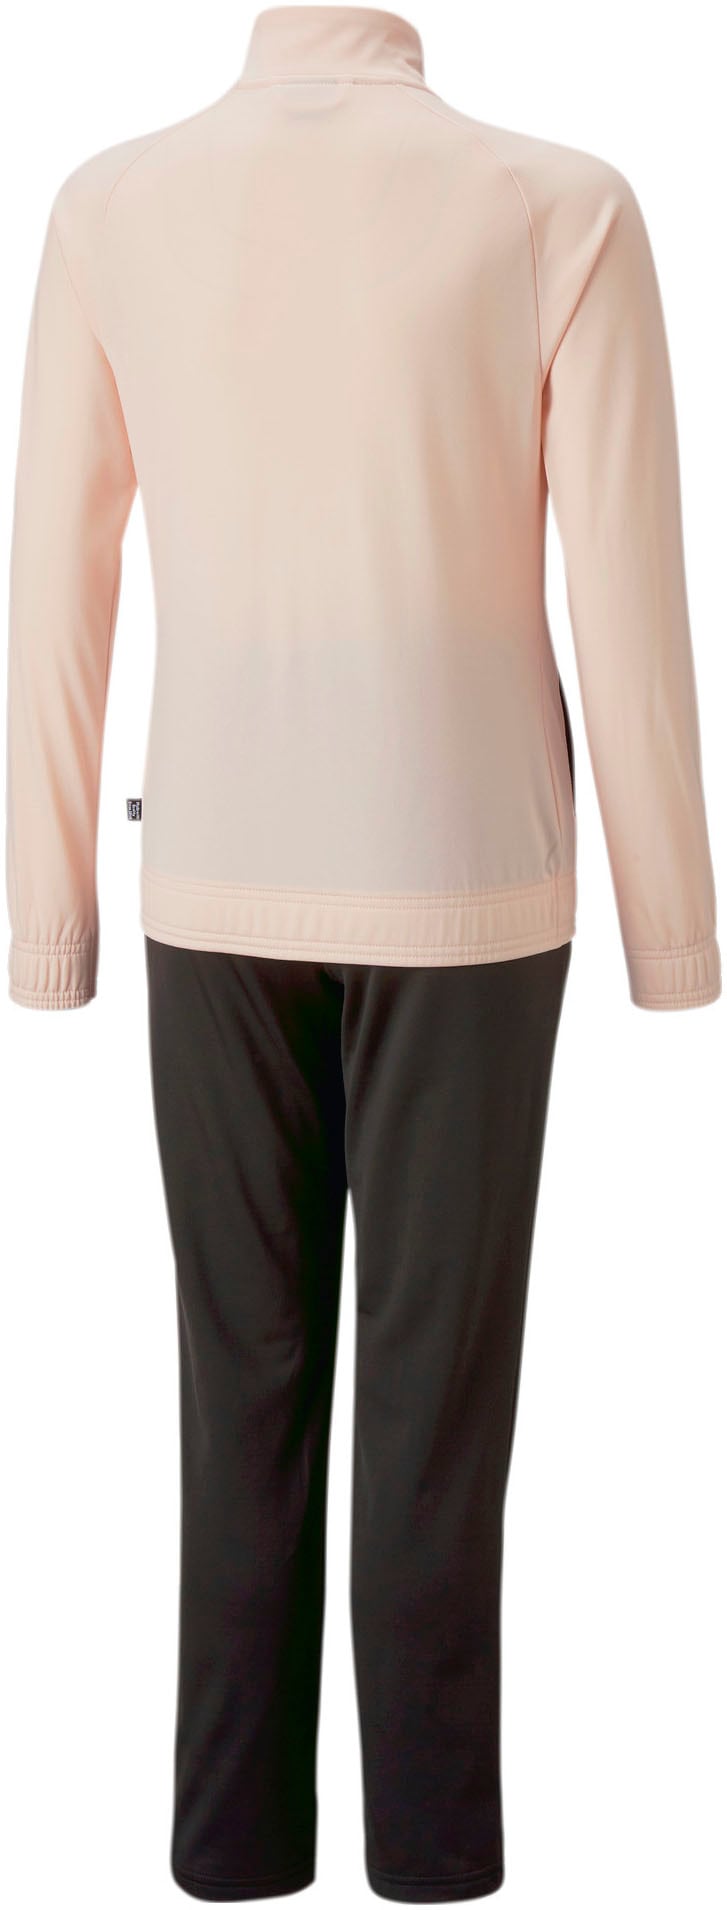 Trendige PUMA Trainingsanzug »TRICOT SUIT shoppen (2 Mindestbestellwert OP tlg.) G«, ohne